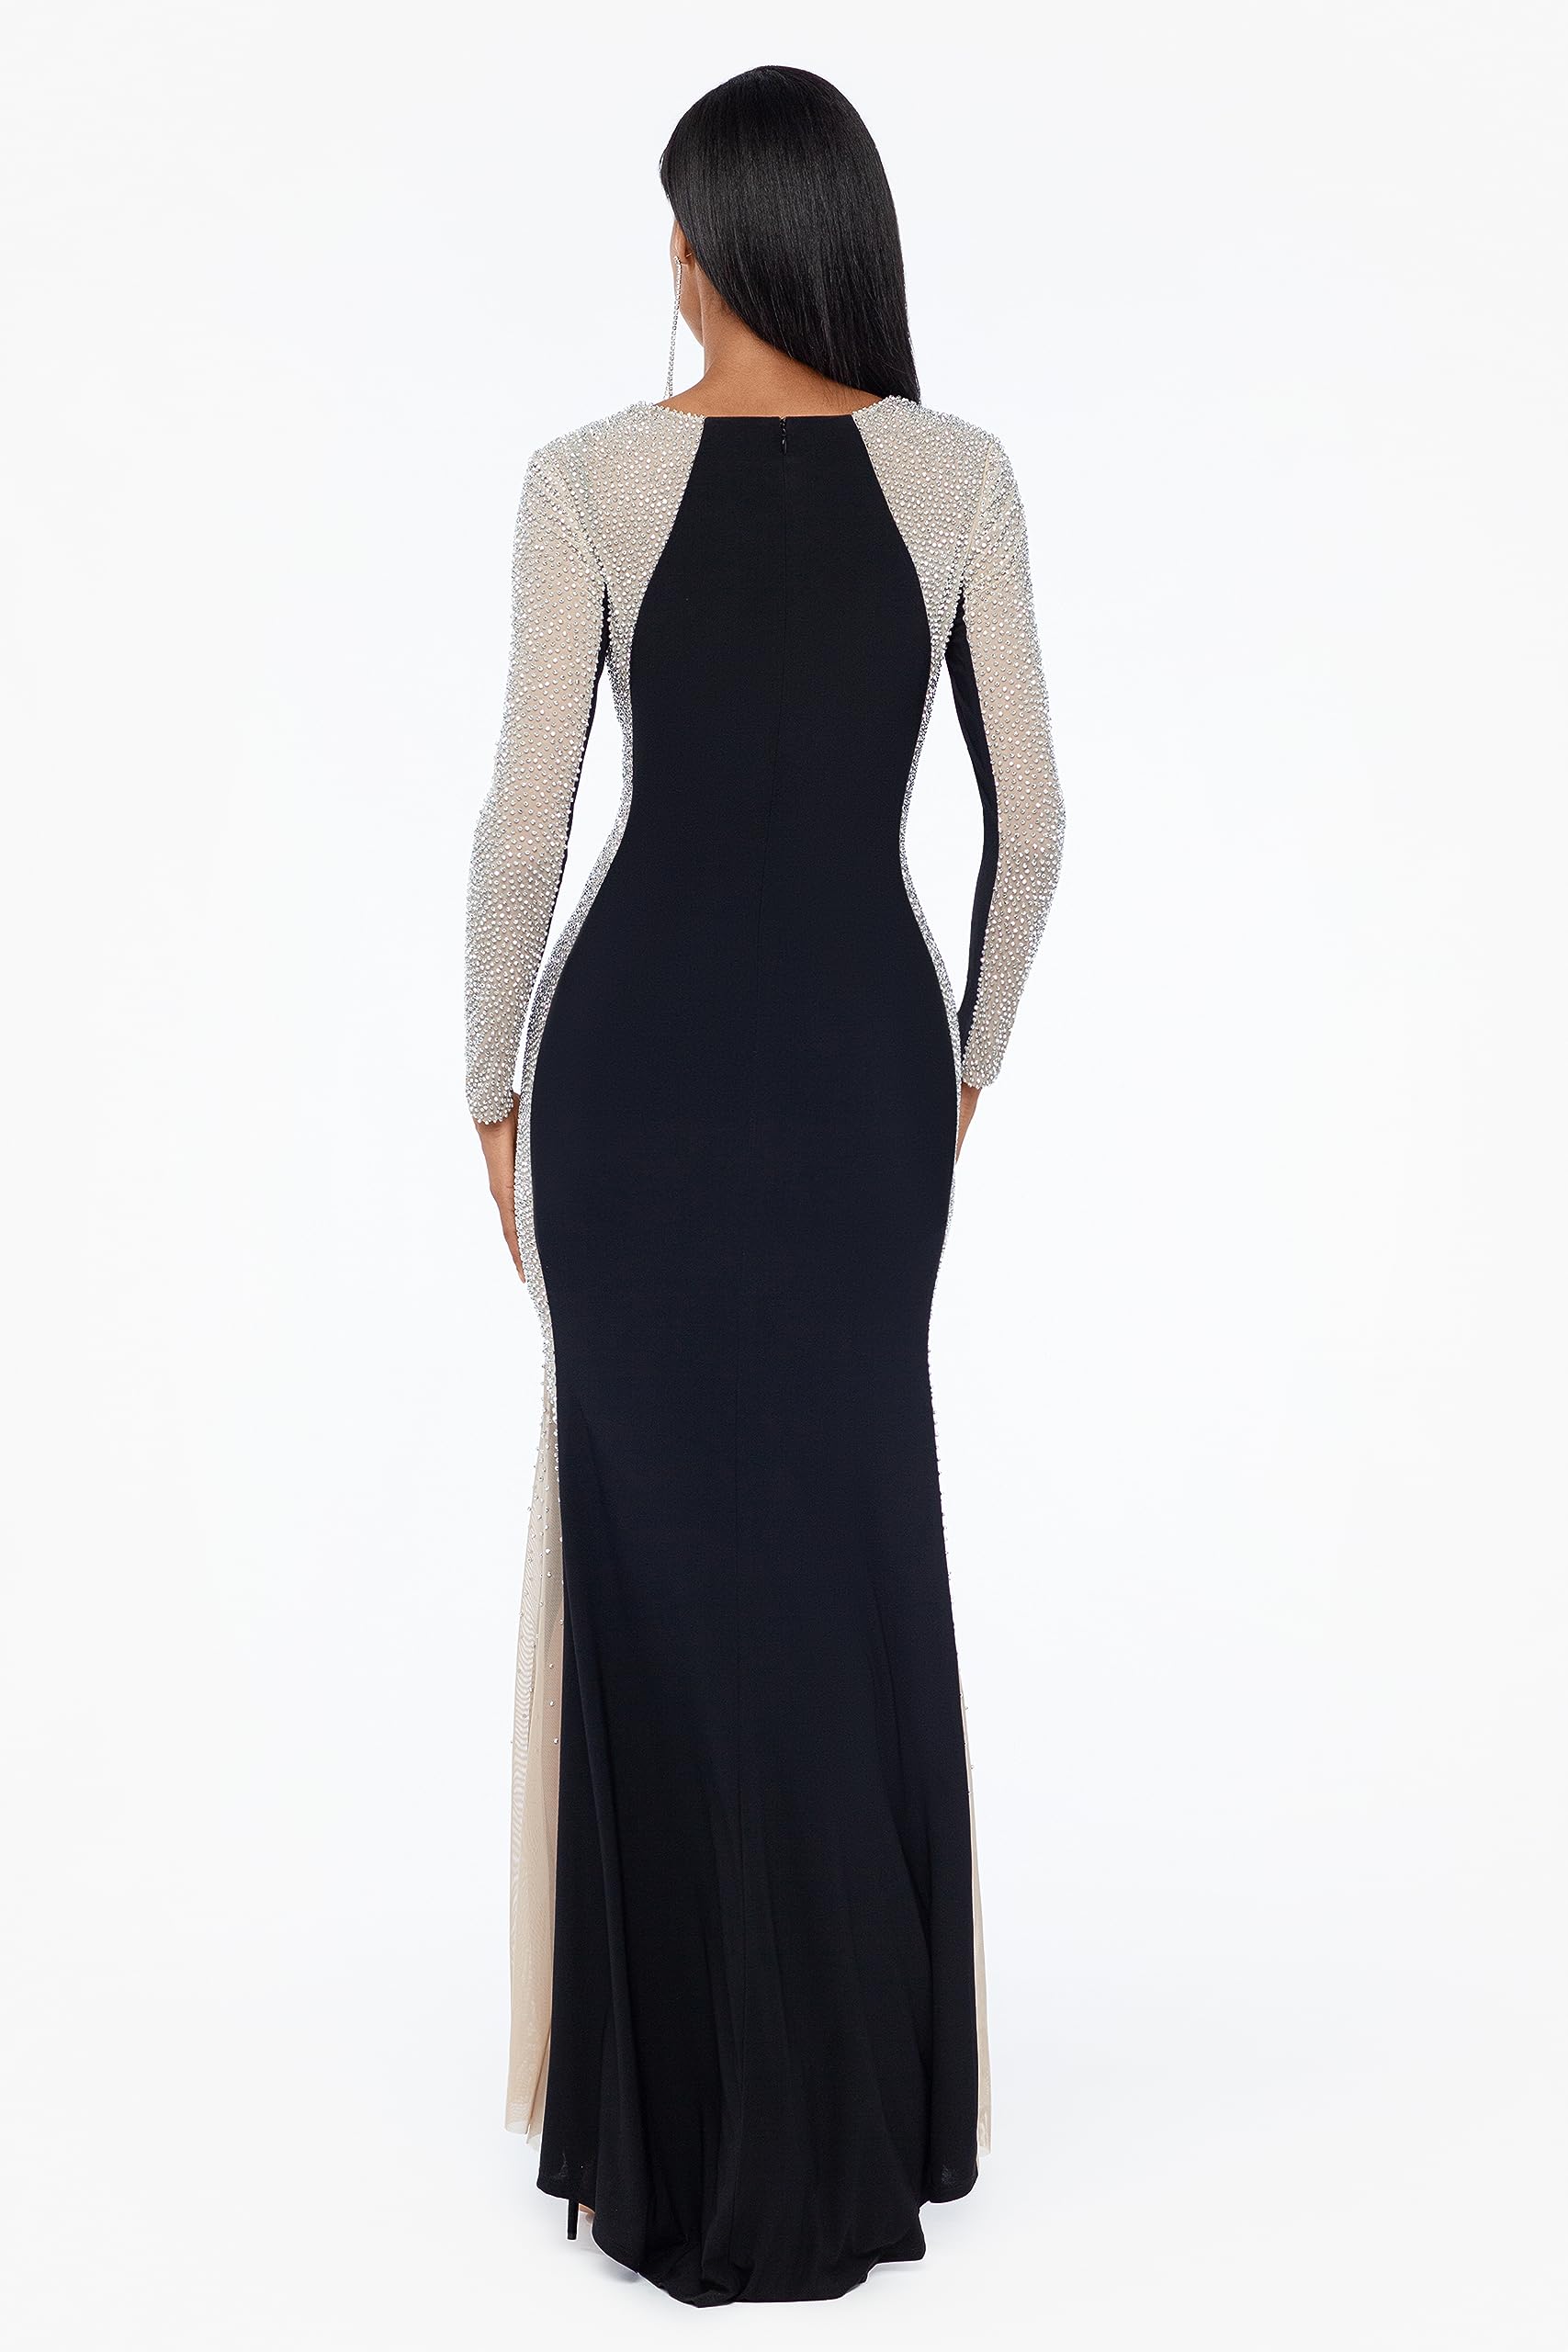 Xscape Women's Long Sleeve Square Neck Caviar Beaded Mesh Panels Dress (Standard & Petite)